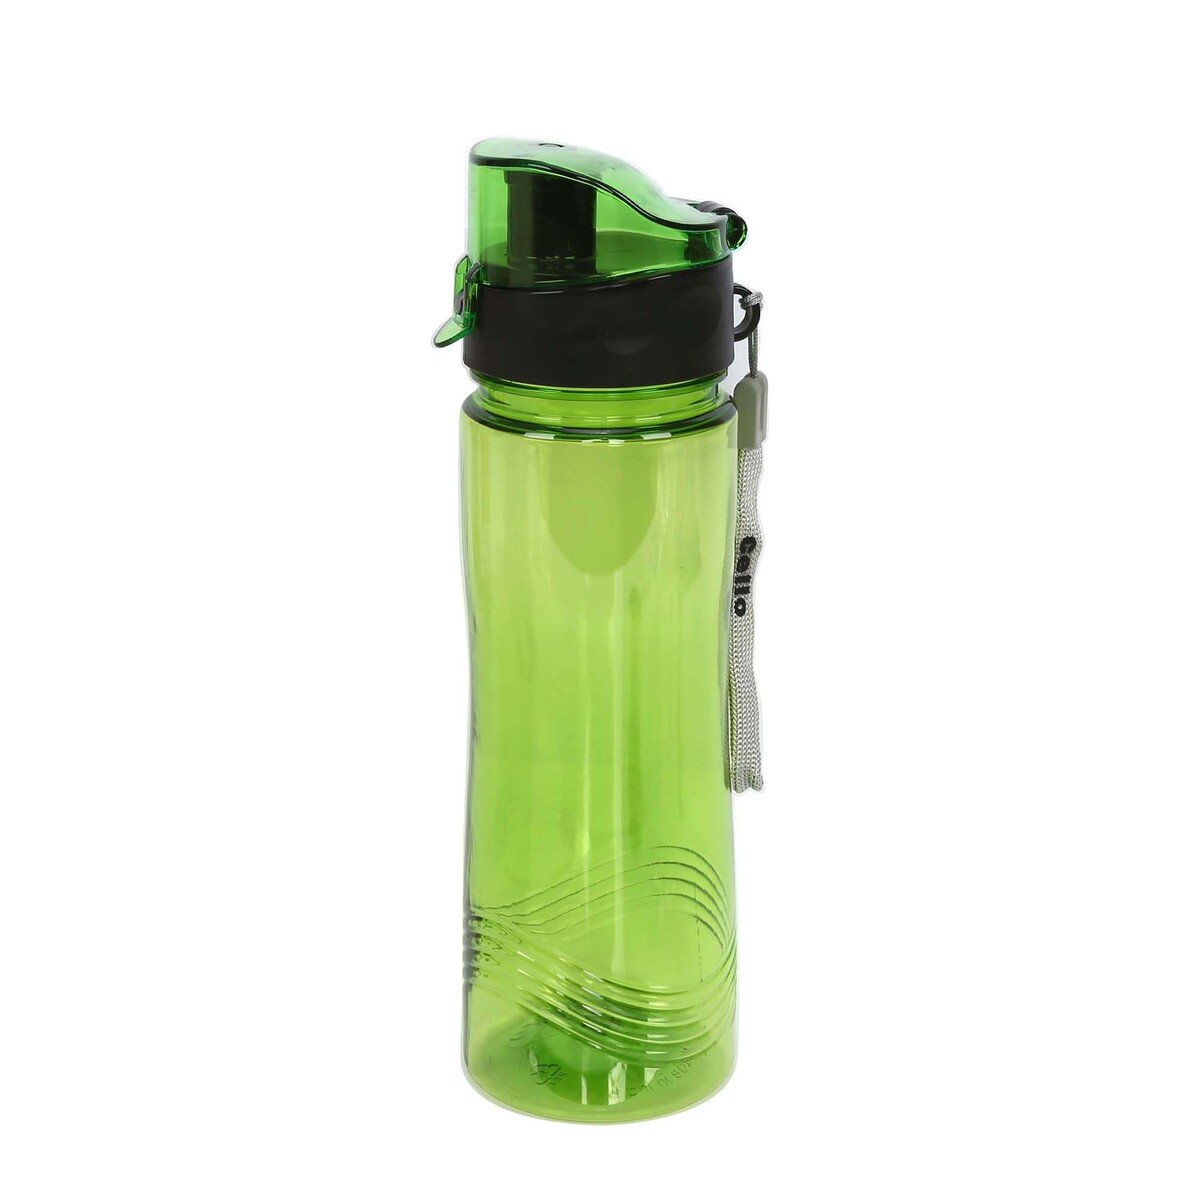 Cello Plastic Water Bottle Sportster 700ml Assorted